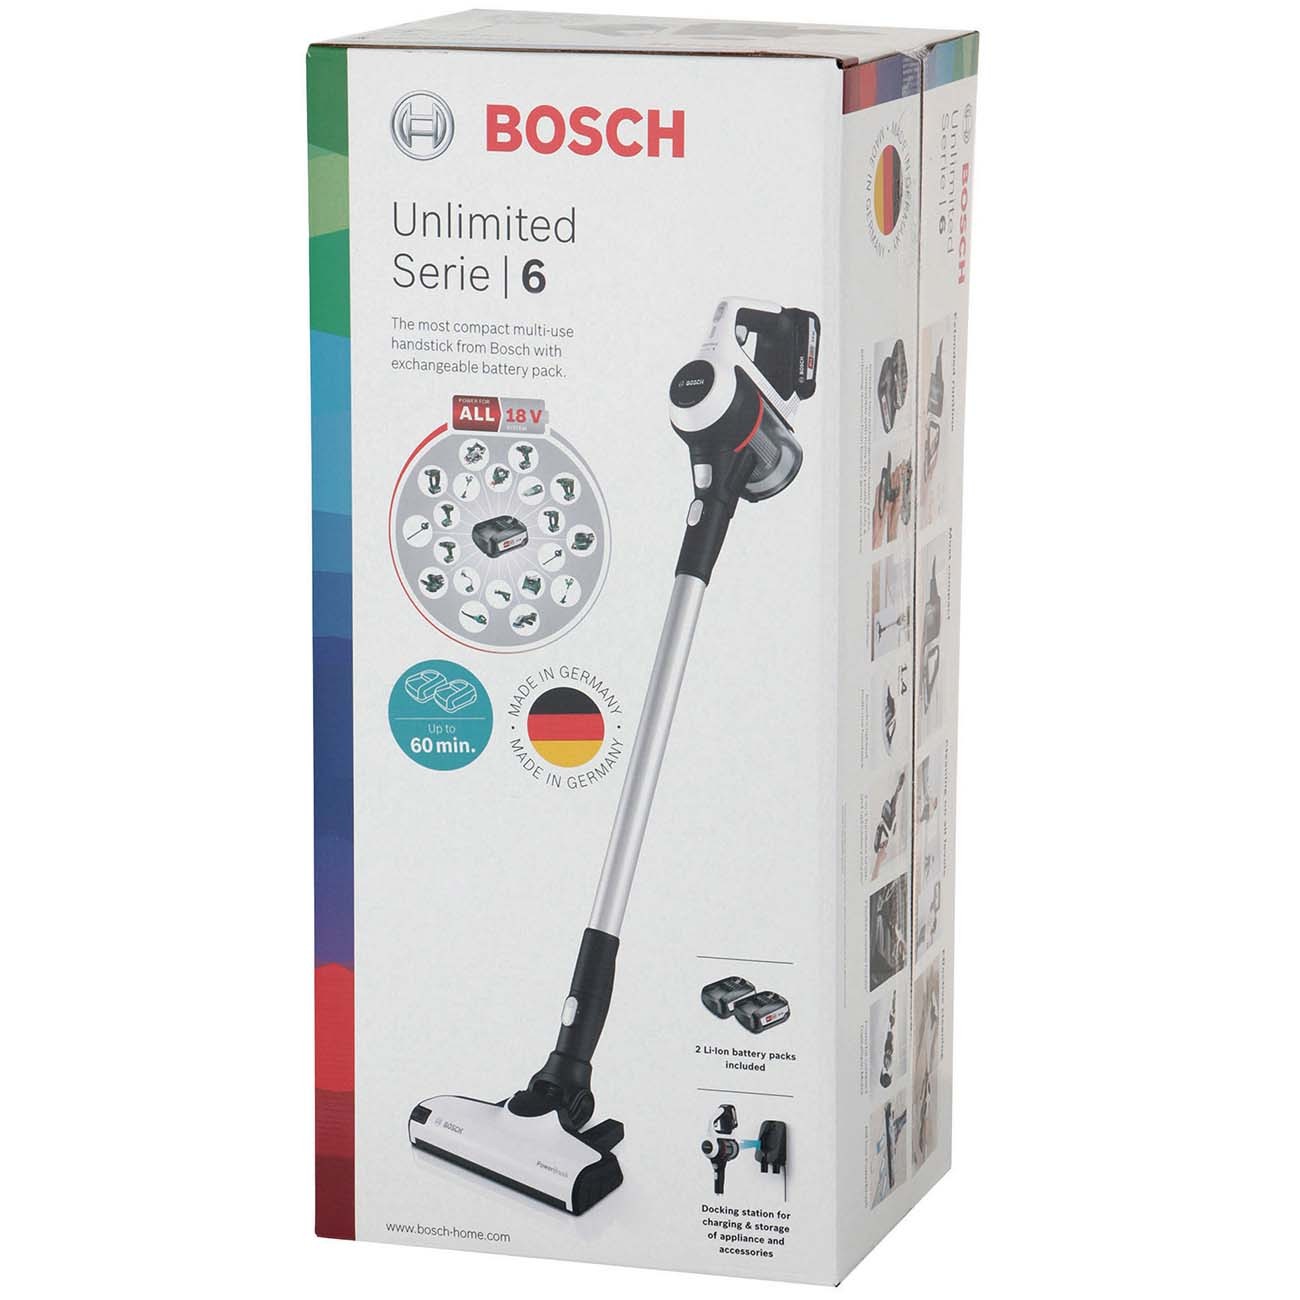 Bosch unlimited купить. Bosch bcs612ka2. Пылесос Bosch bcs612ka2. Вертикальный пылесос Bosch Unlimited 6. Пылесос Bosch Unlimited serie 6.